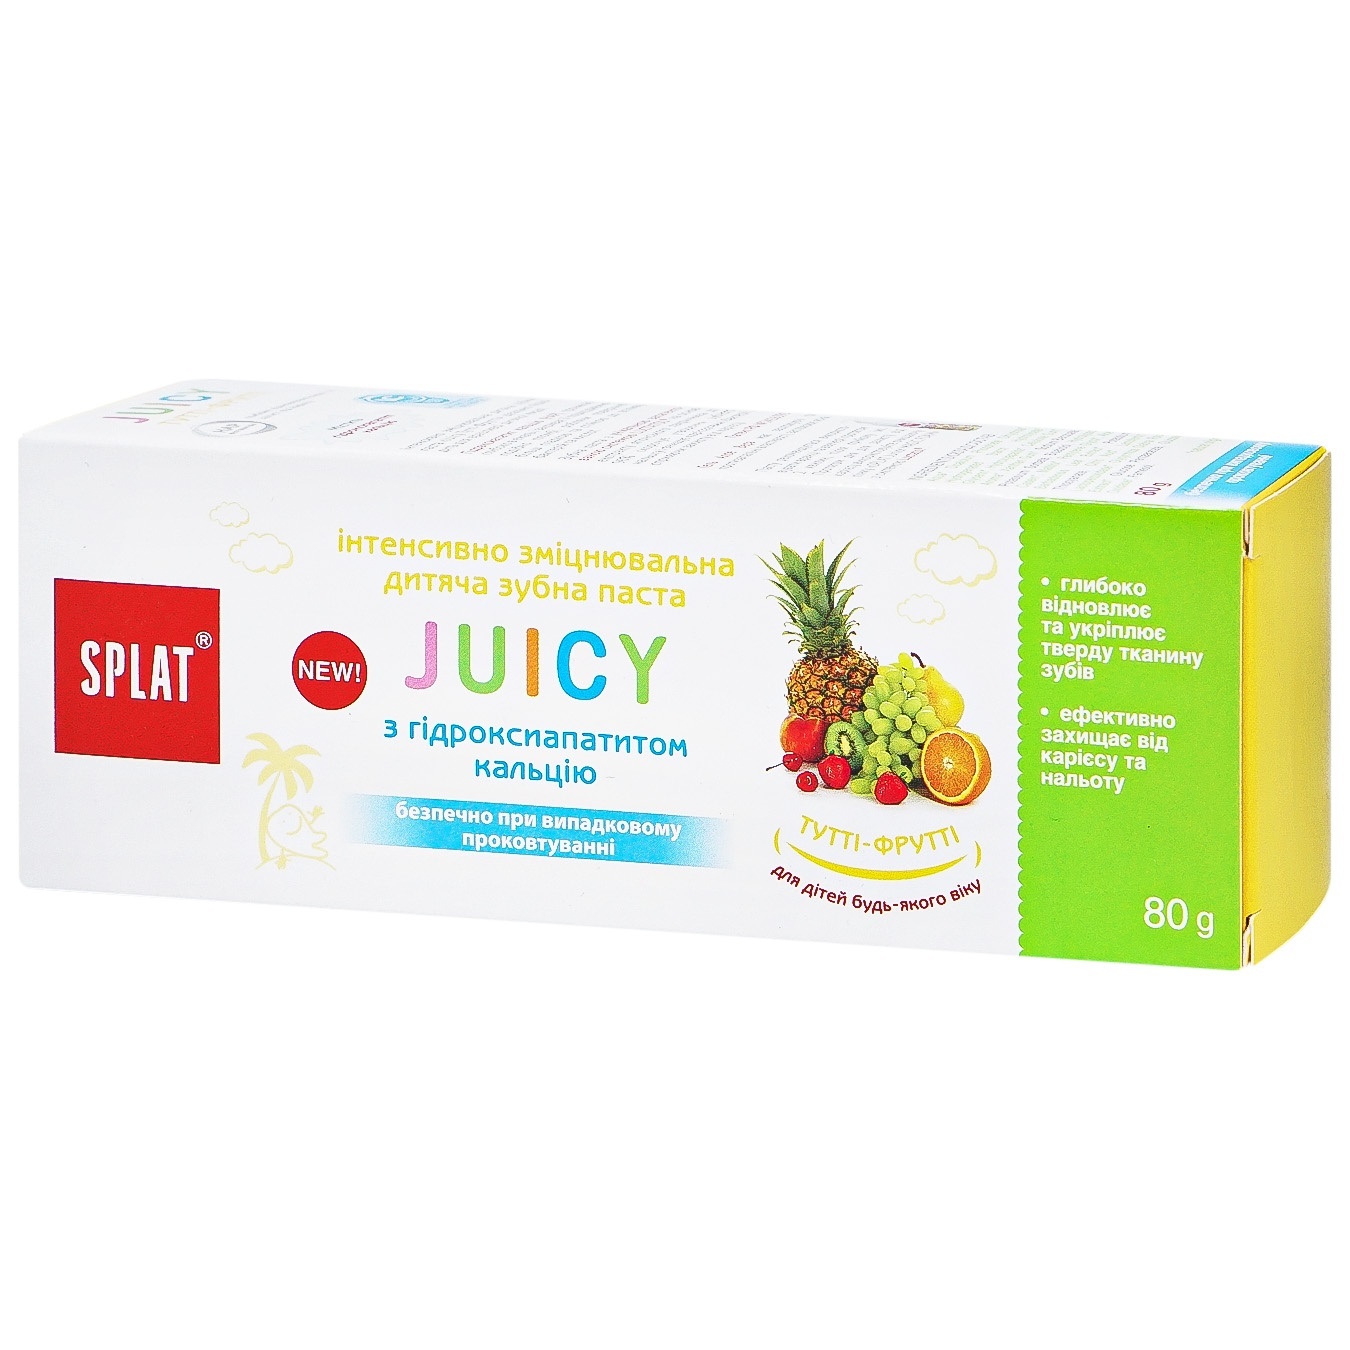 Children's toothpaste Splat juicy Tutti-Frutti 80g